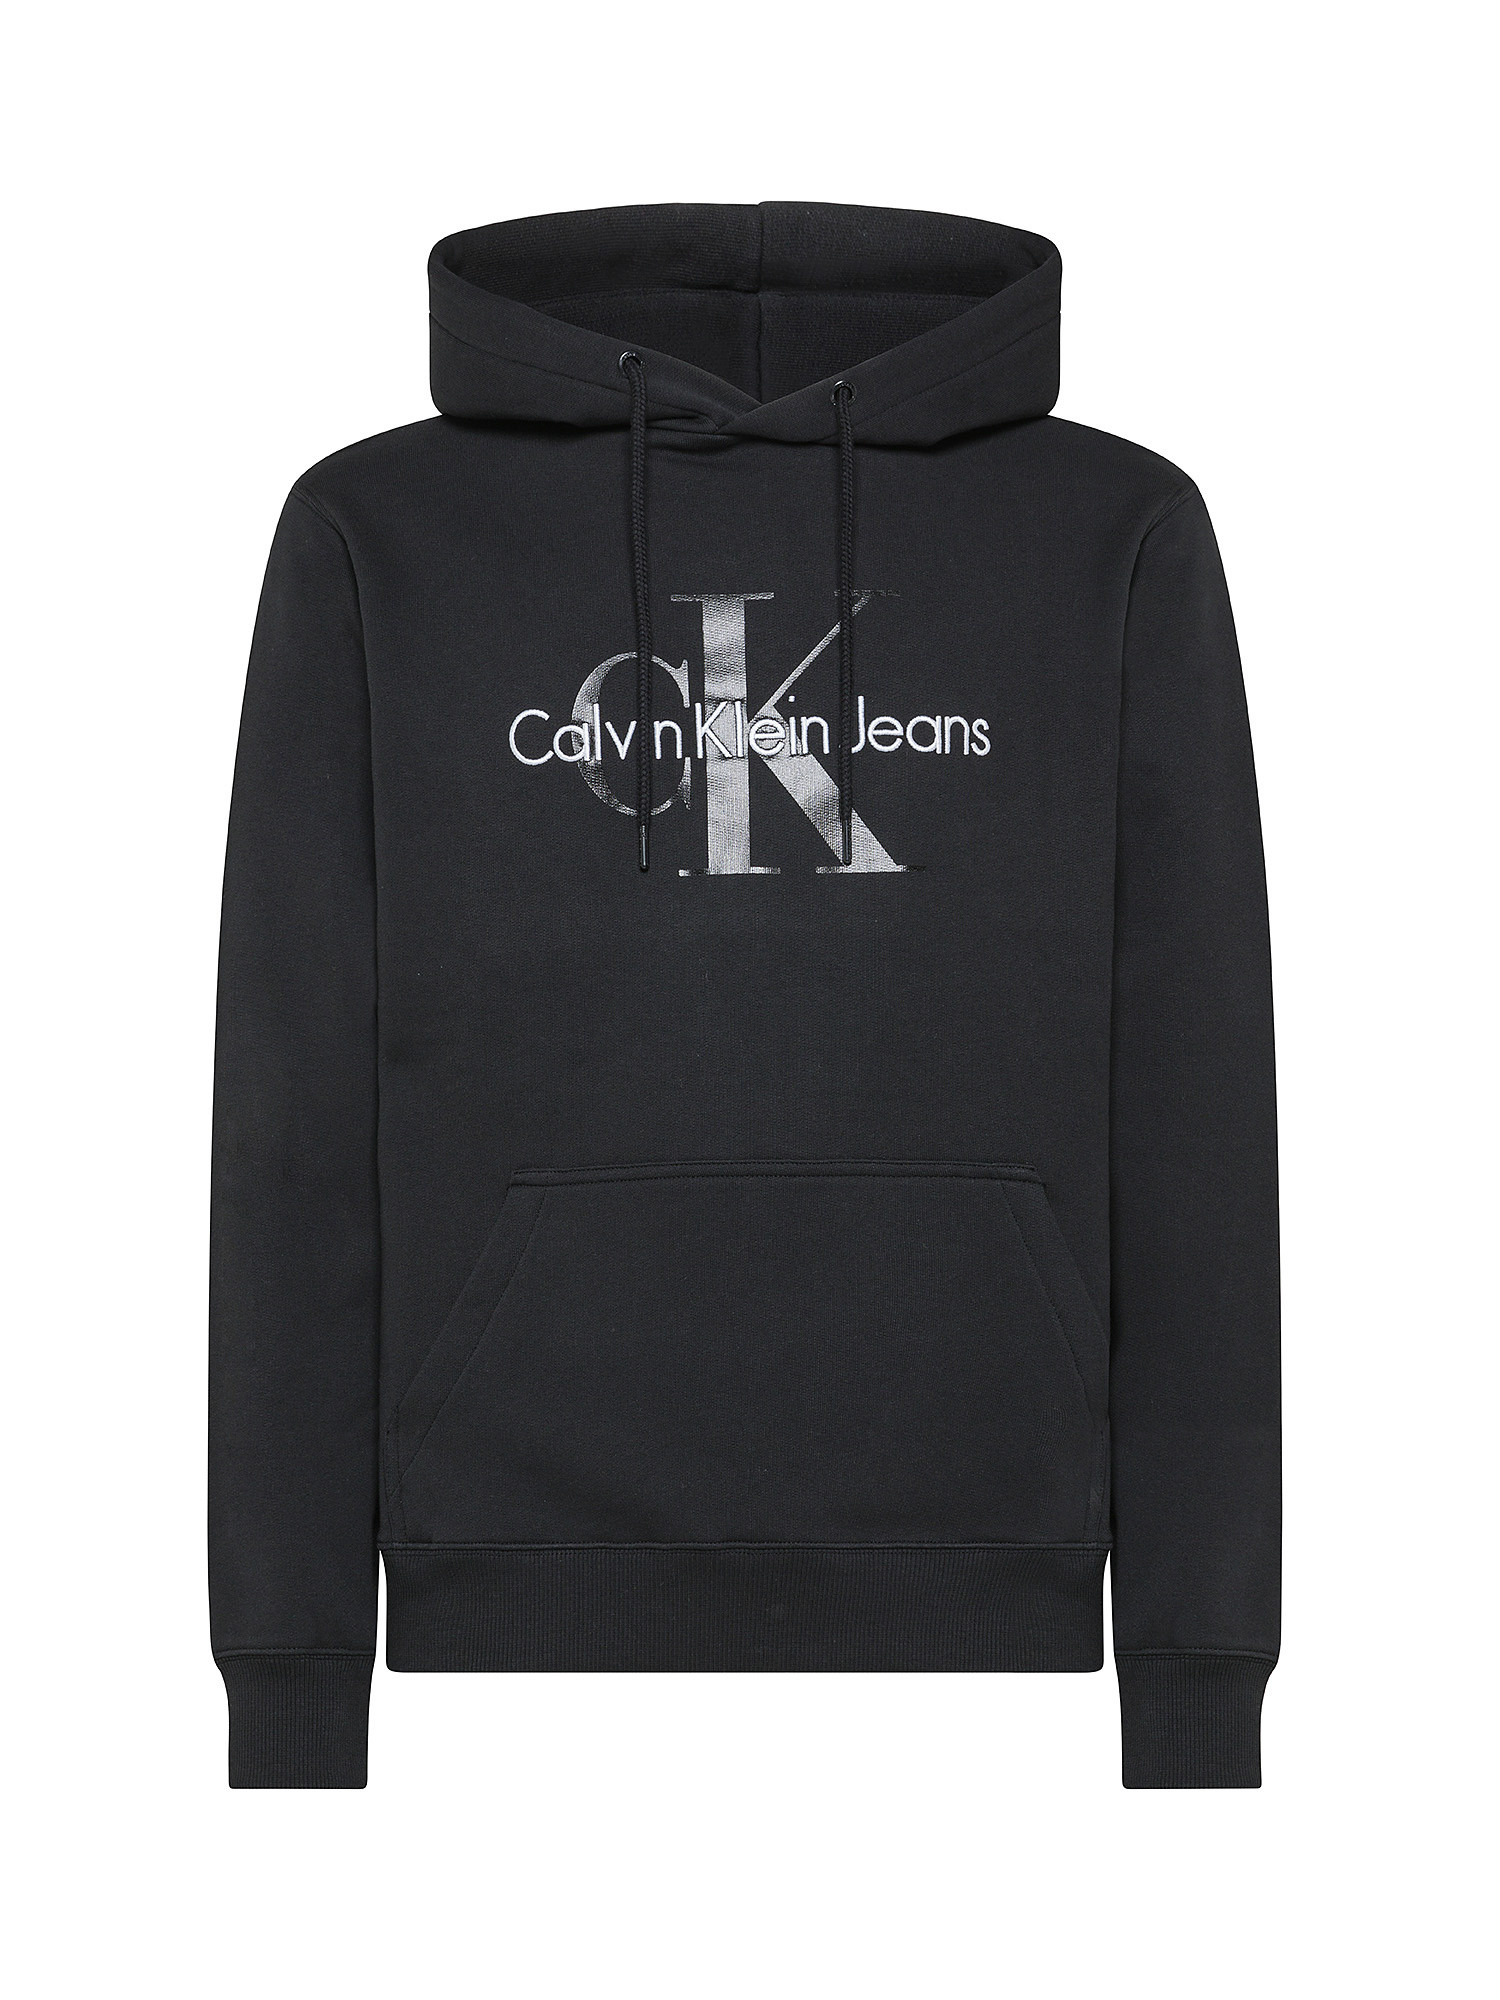 Calvin Klein Jeans -  Felpa con cappuccio in cotone con logo, Nero, large image number 0